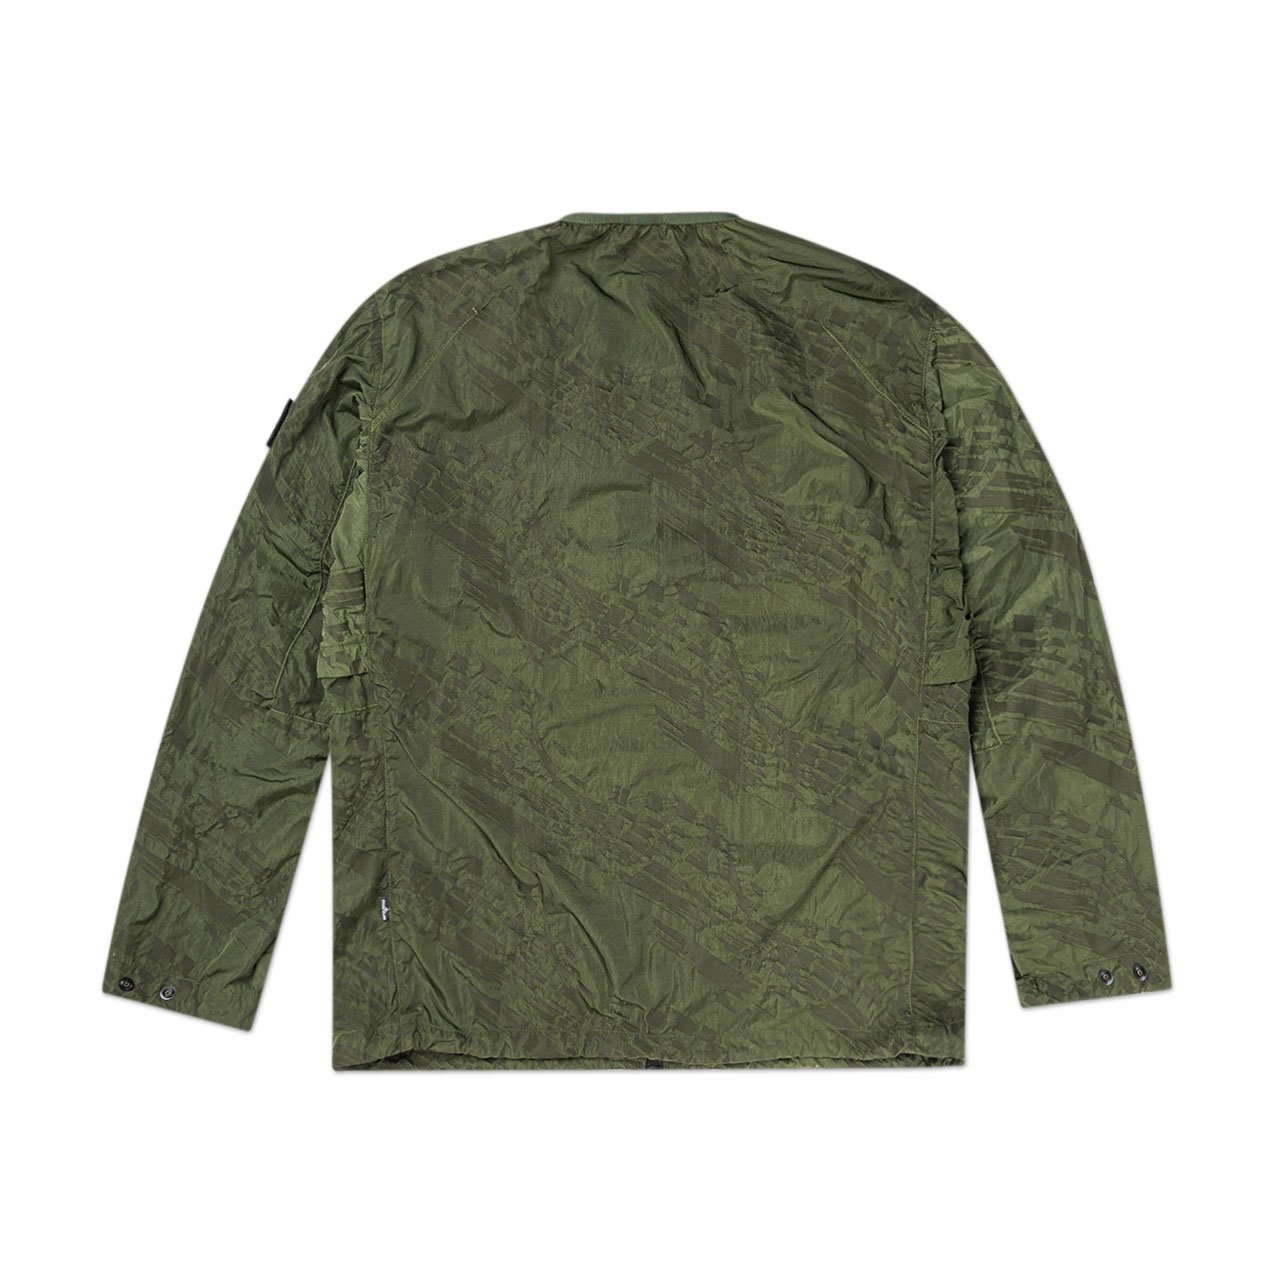 stone island shadow project imprint nylon colarless jacket (olive) - 701940505.v0053 - a.plus - Image - 2